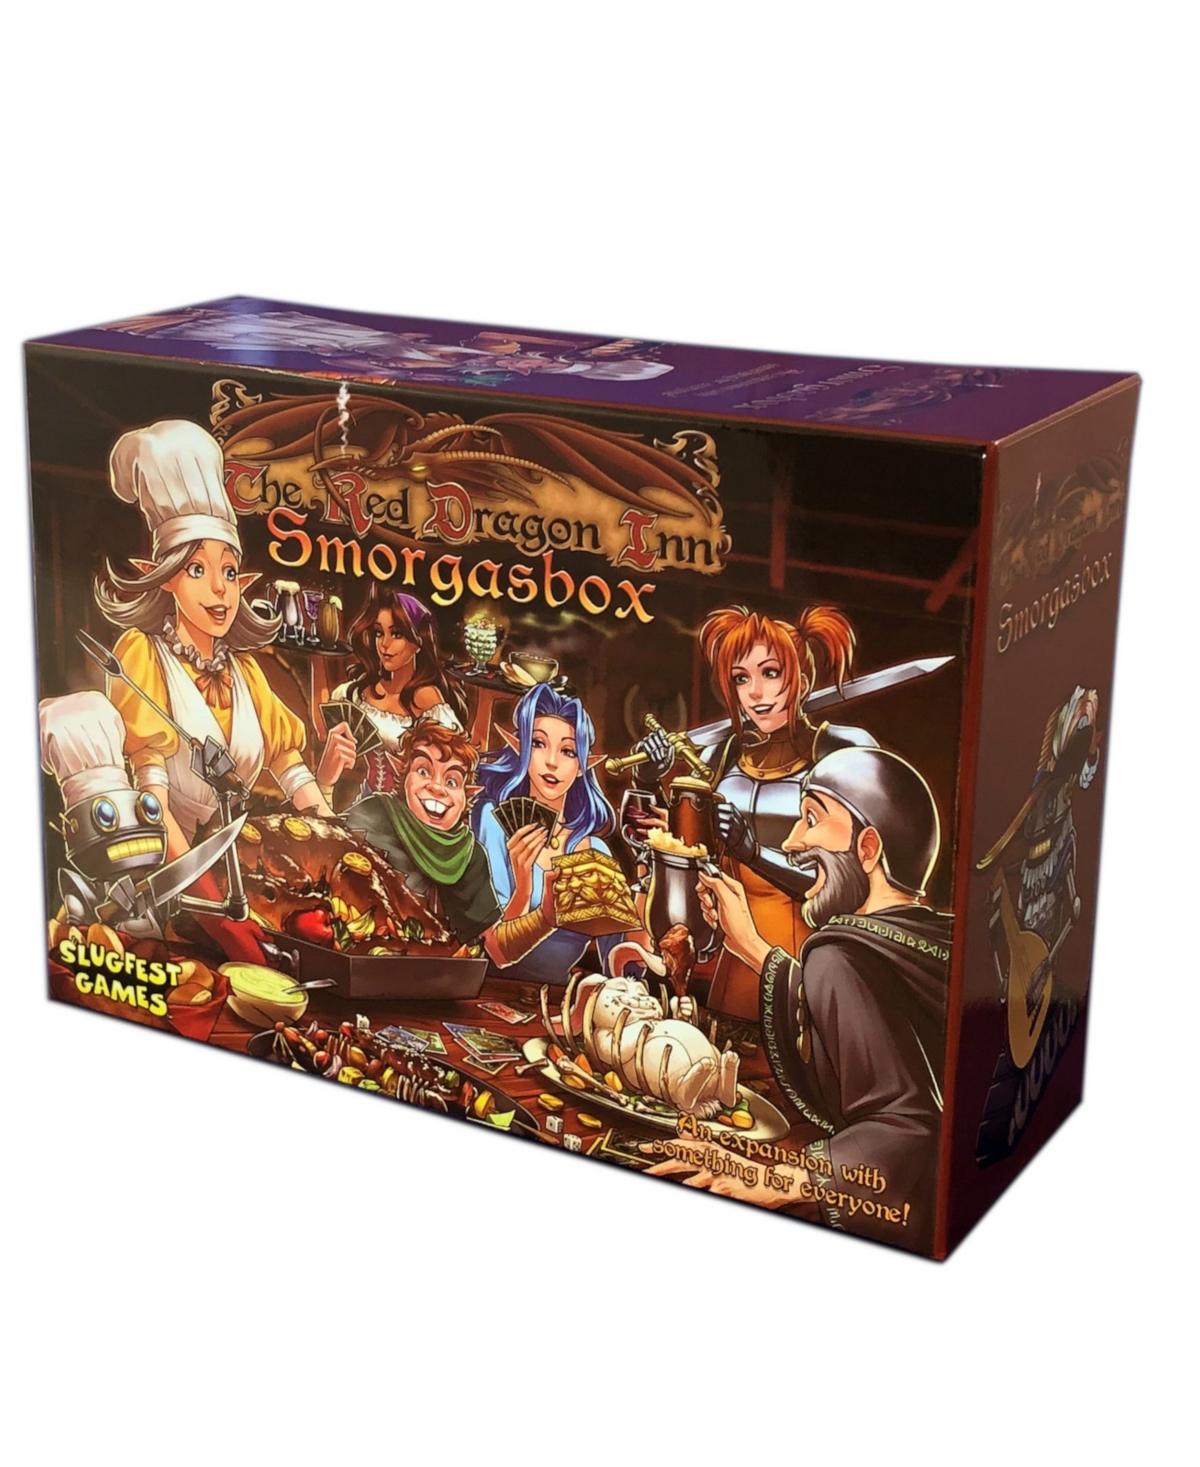 Masterpieces Puzzles Slugest Games Red Dragon Inn- Smorgasbox Board Game In Multi